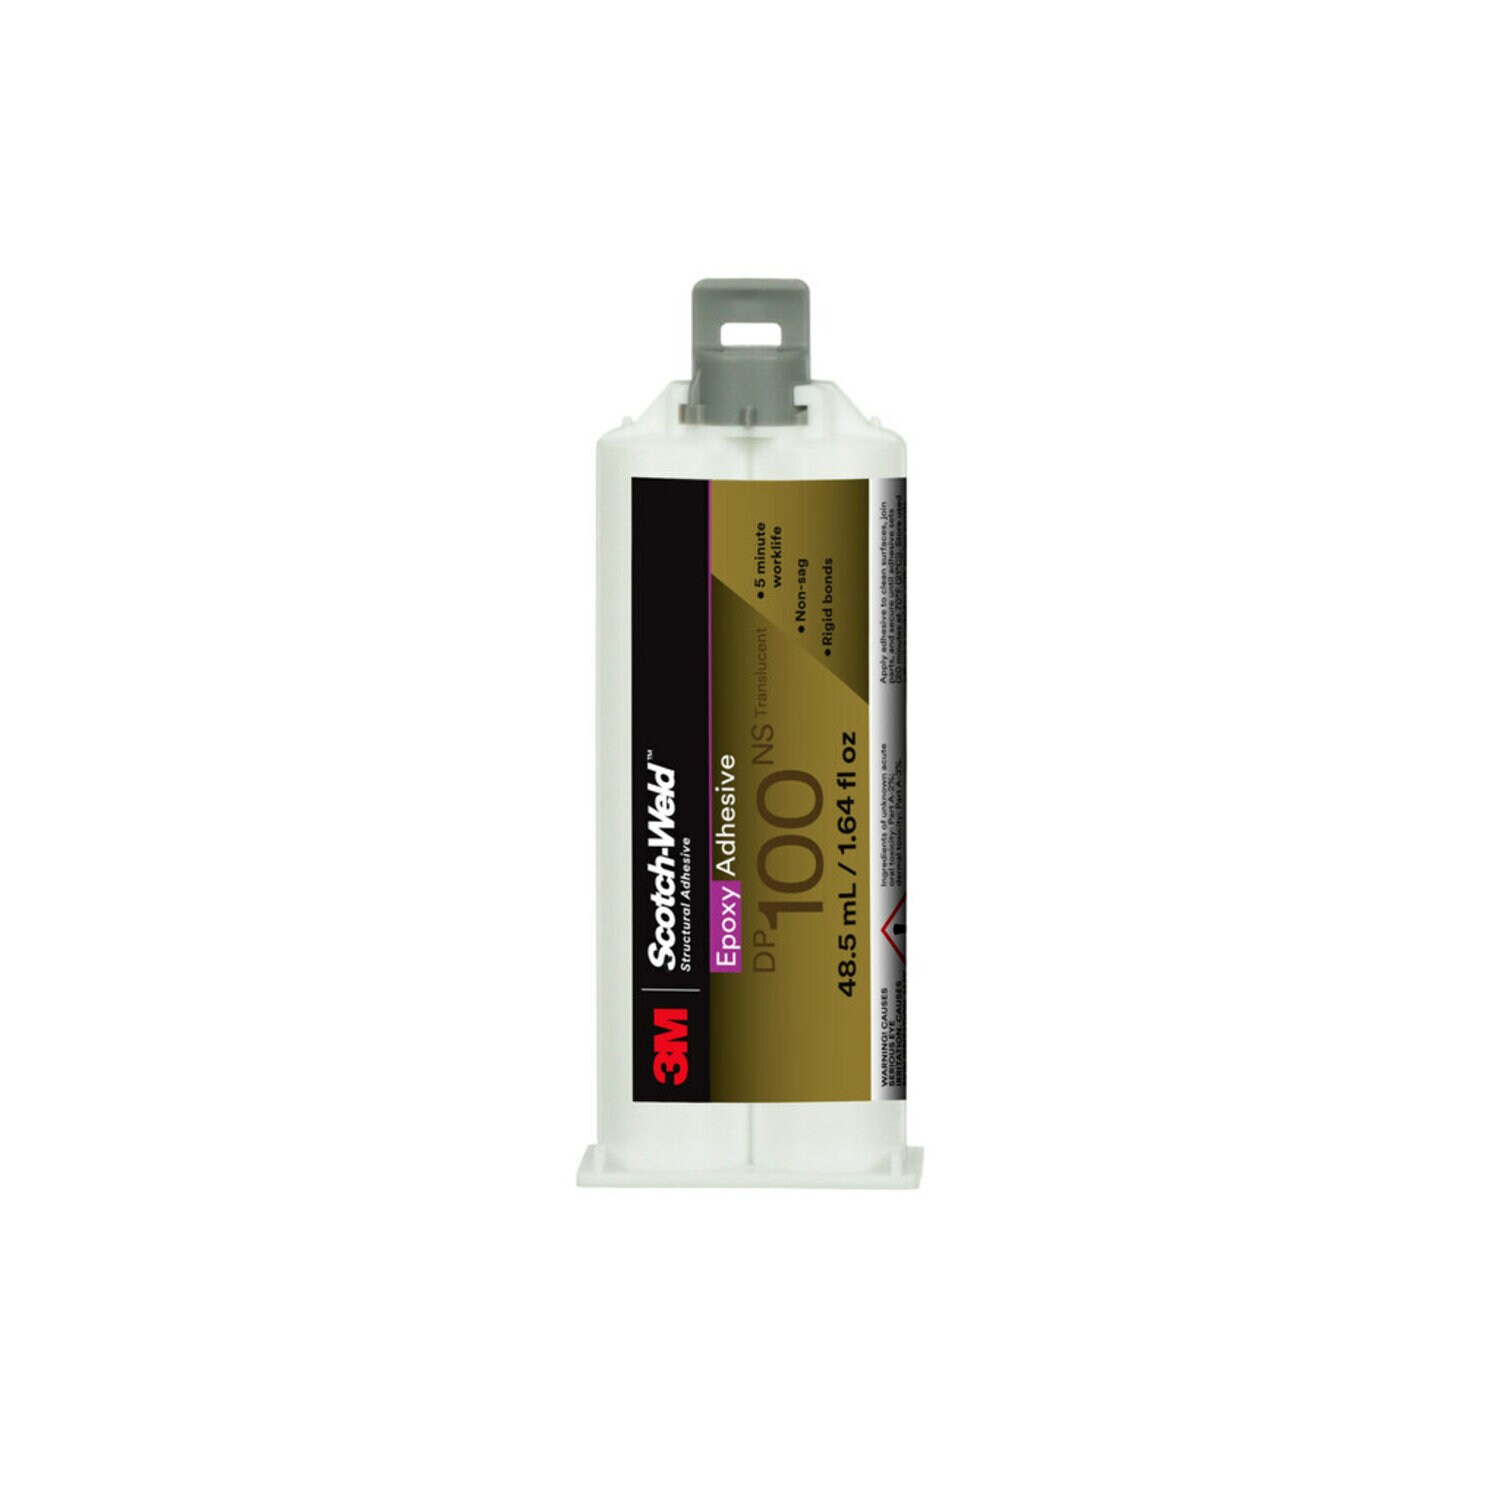 7100148744 - 3M Scotch-Weld Epoxy Adhesive DP100NS, Translucent, 48.5 mL Duo-Pak,
12/Case